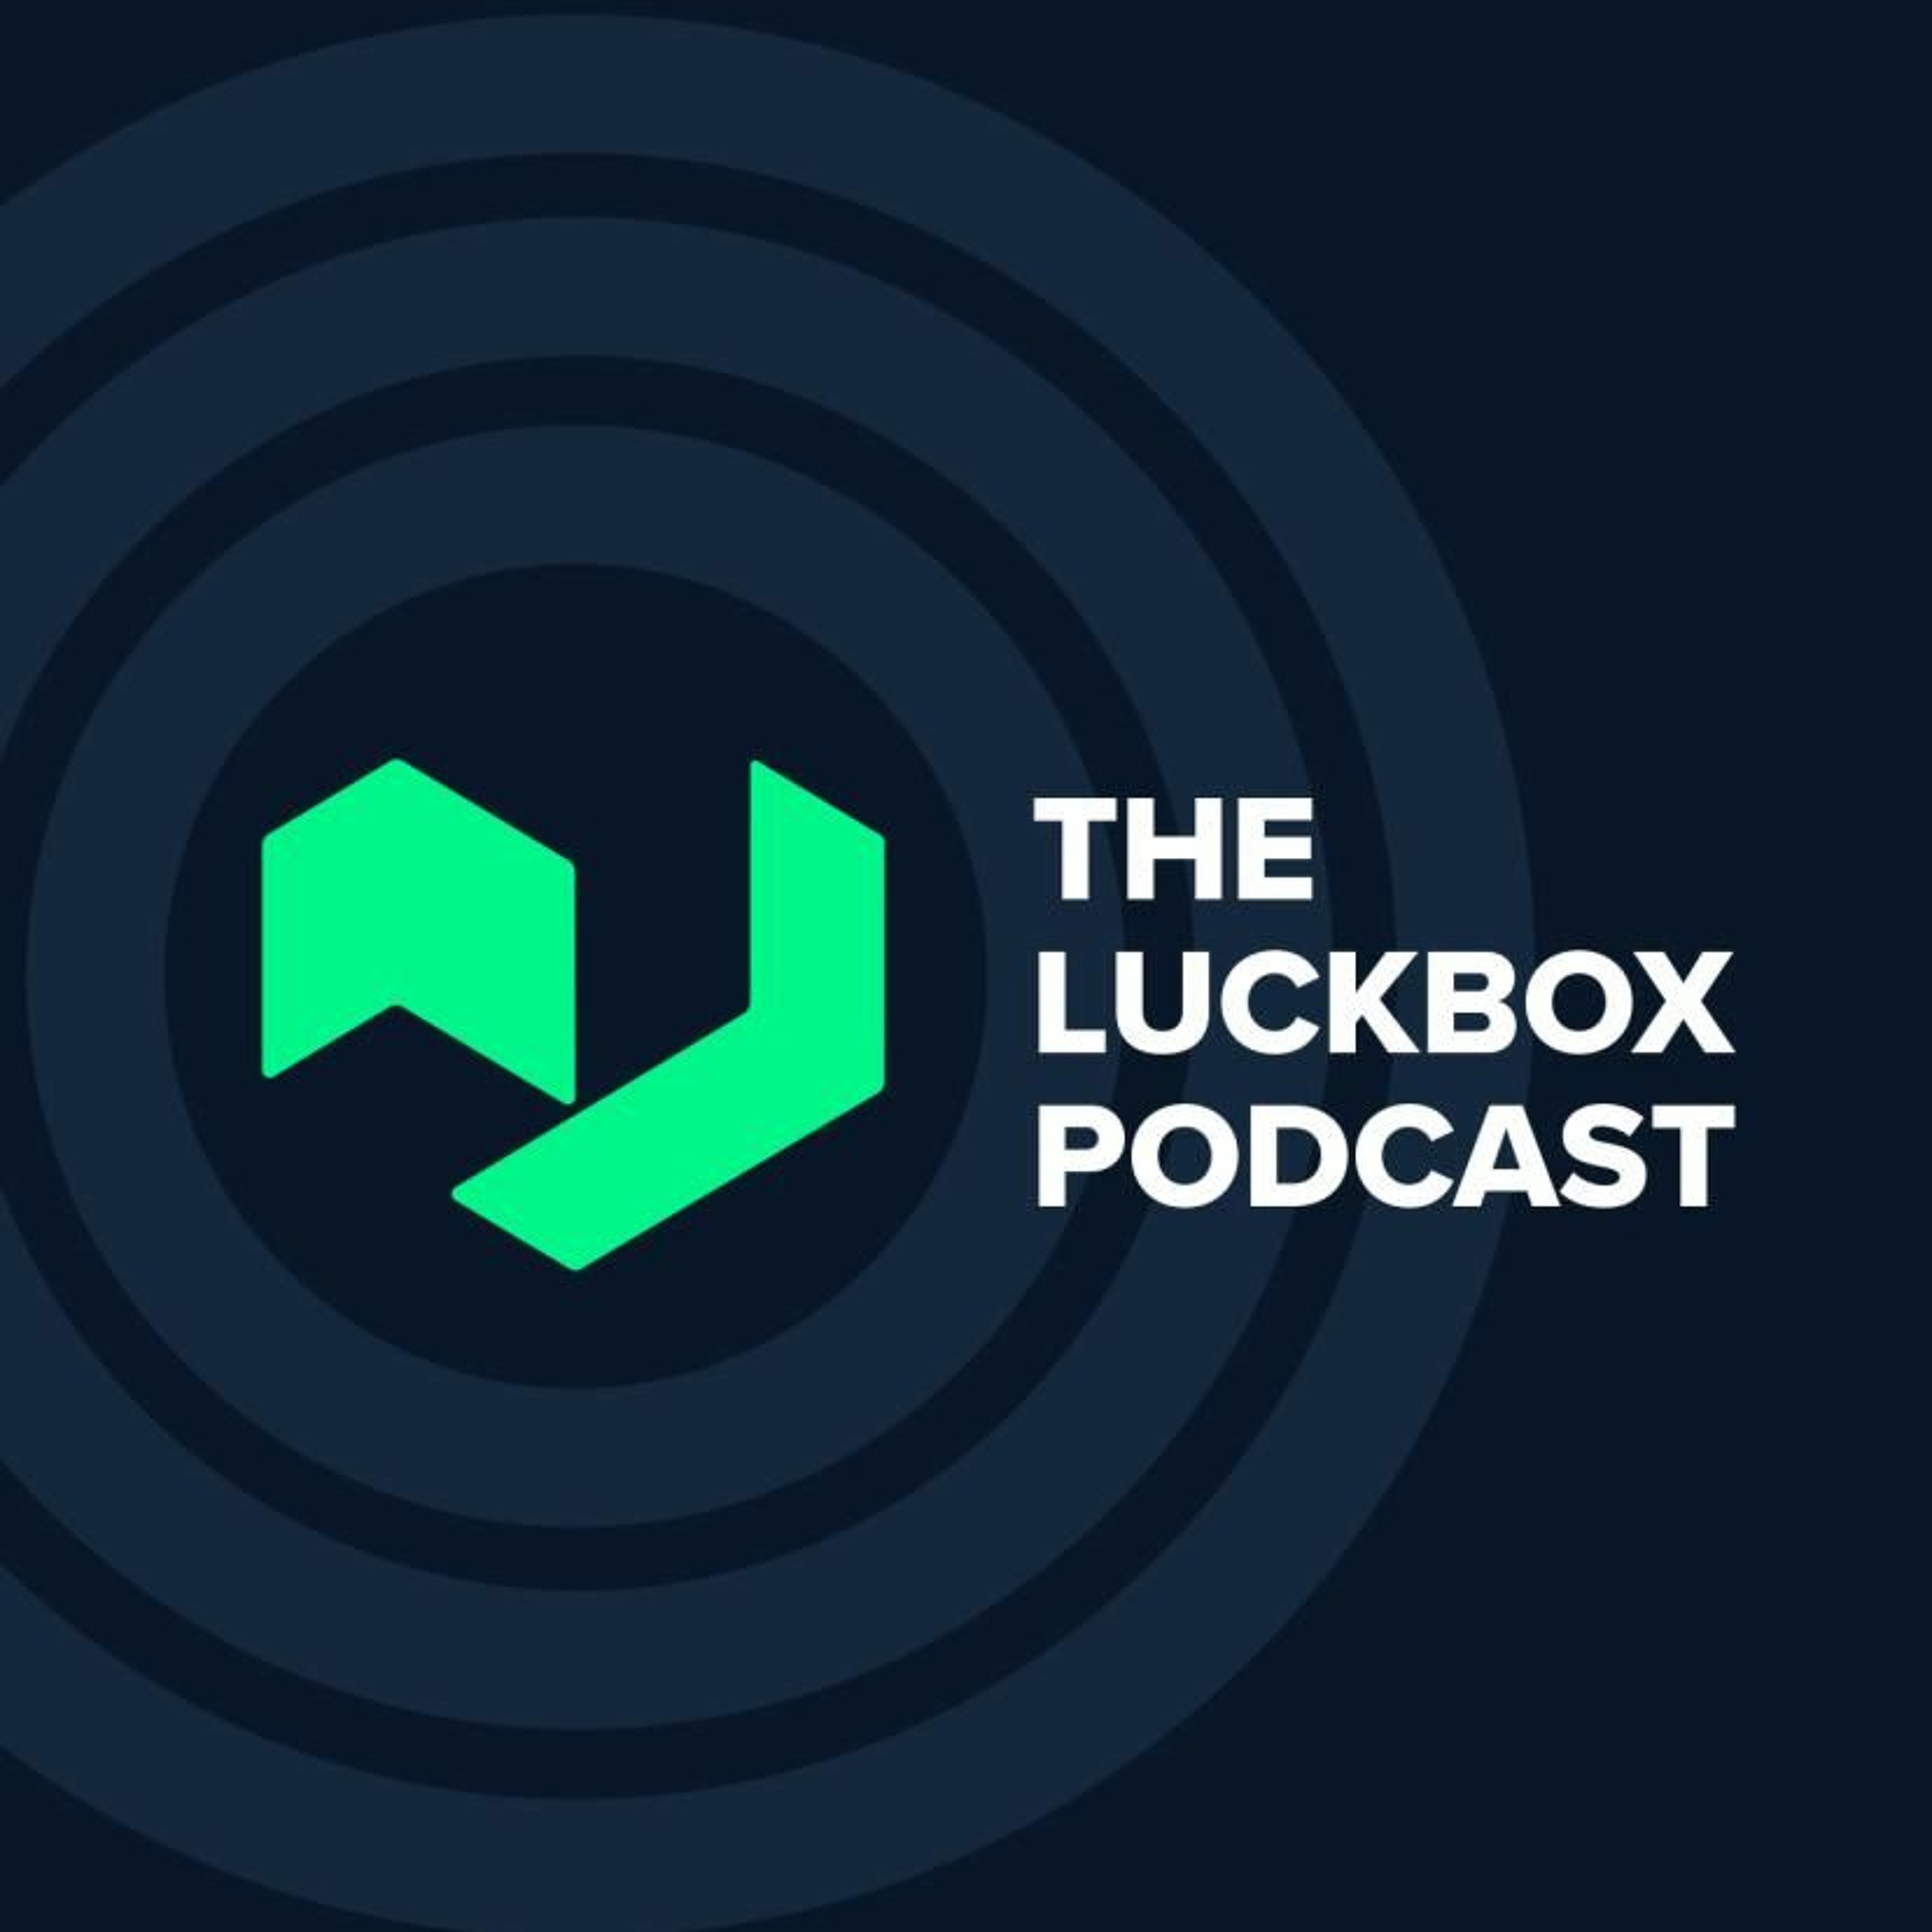 Kyle Freedman shares some Secrets | The Luckbox Podcast